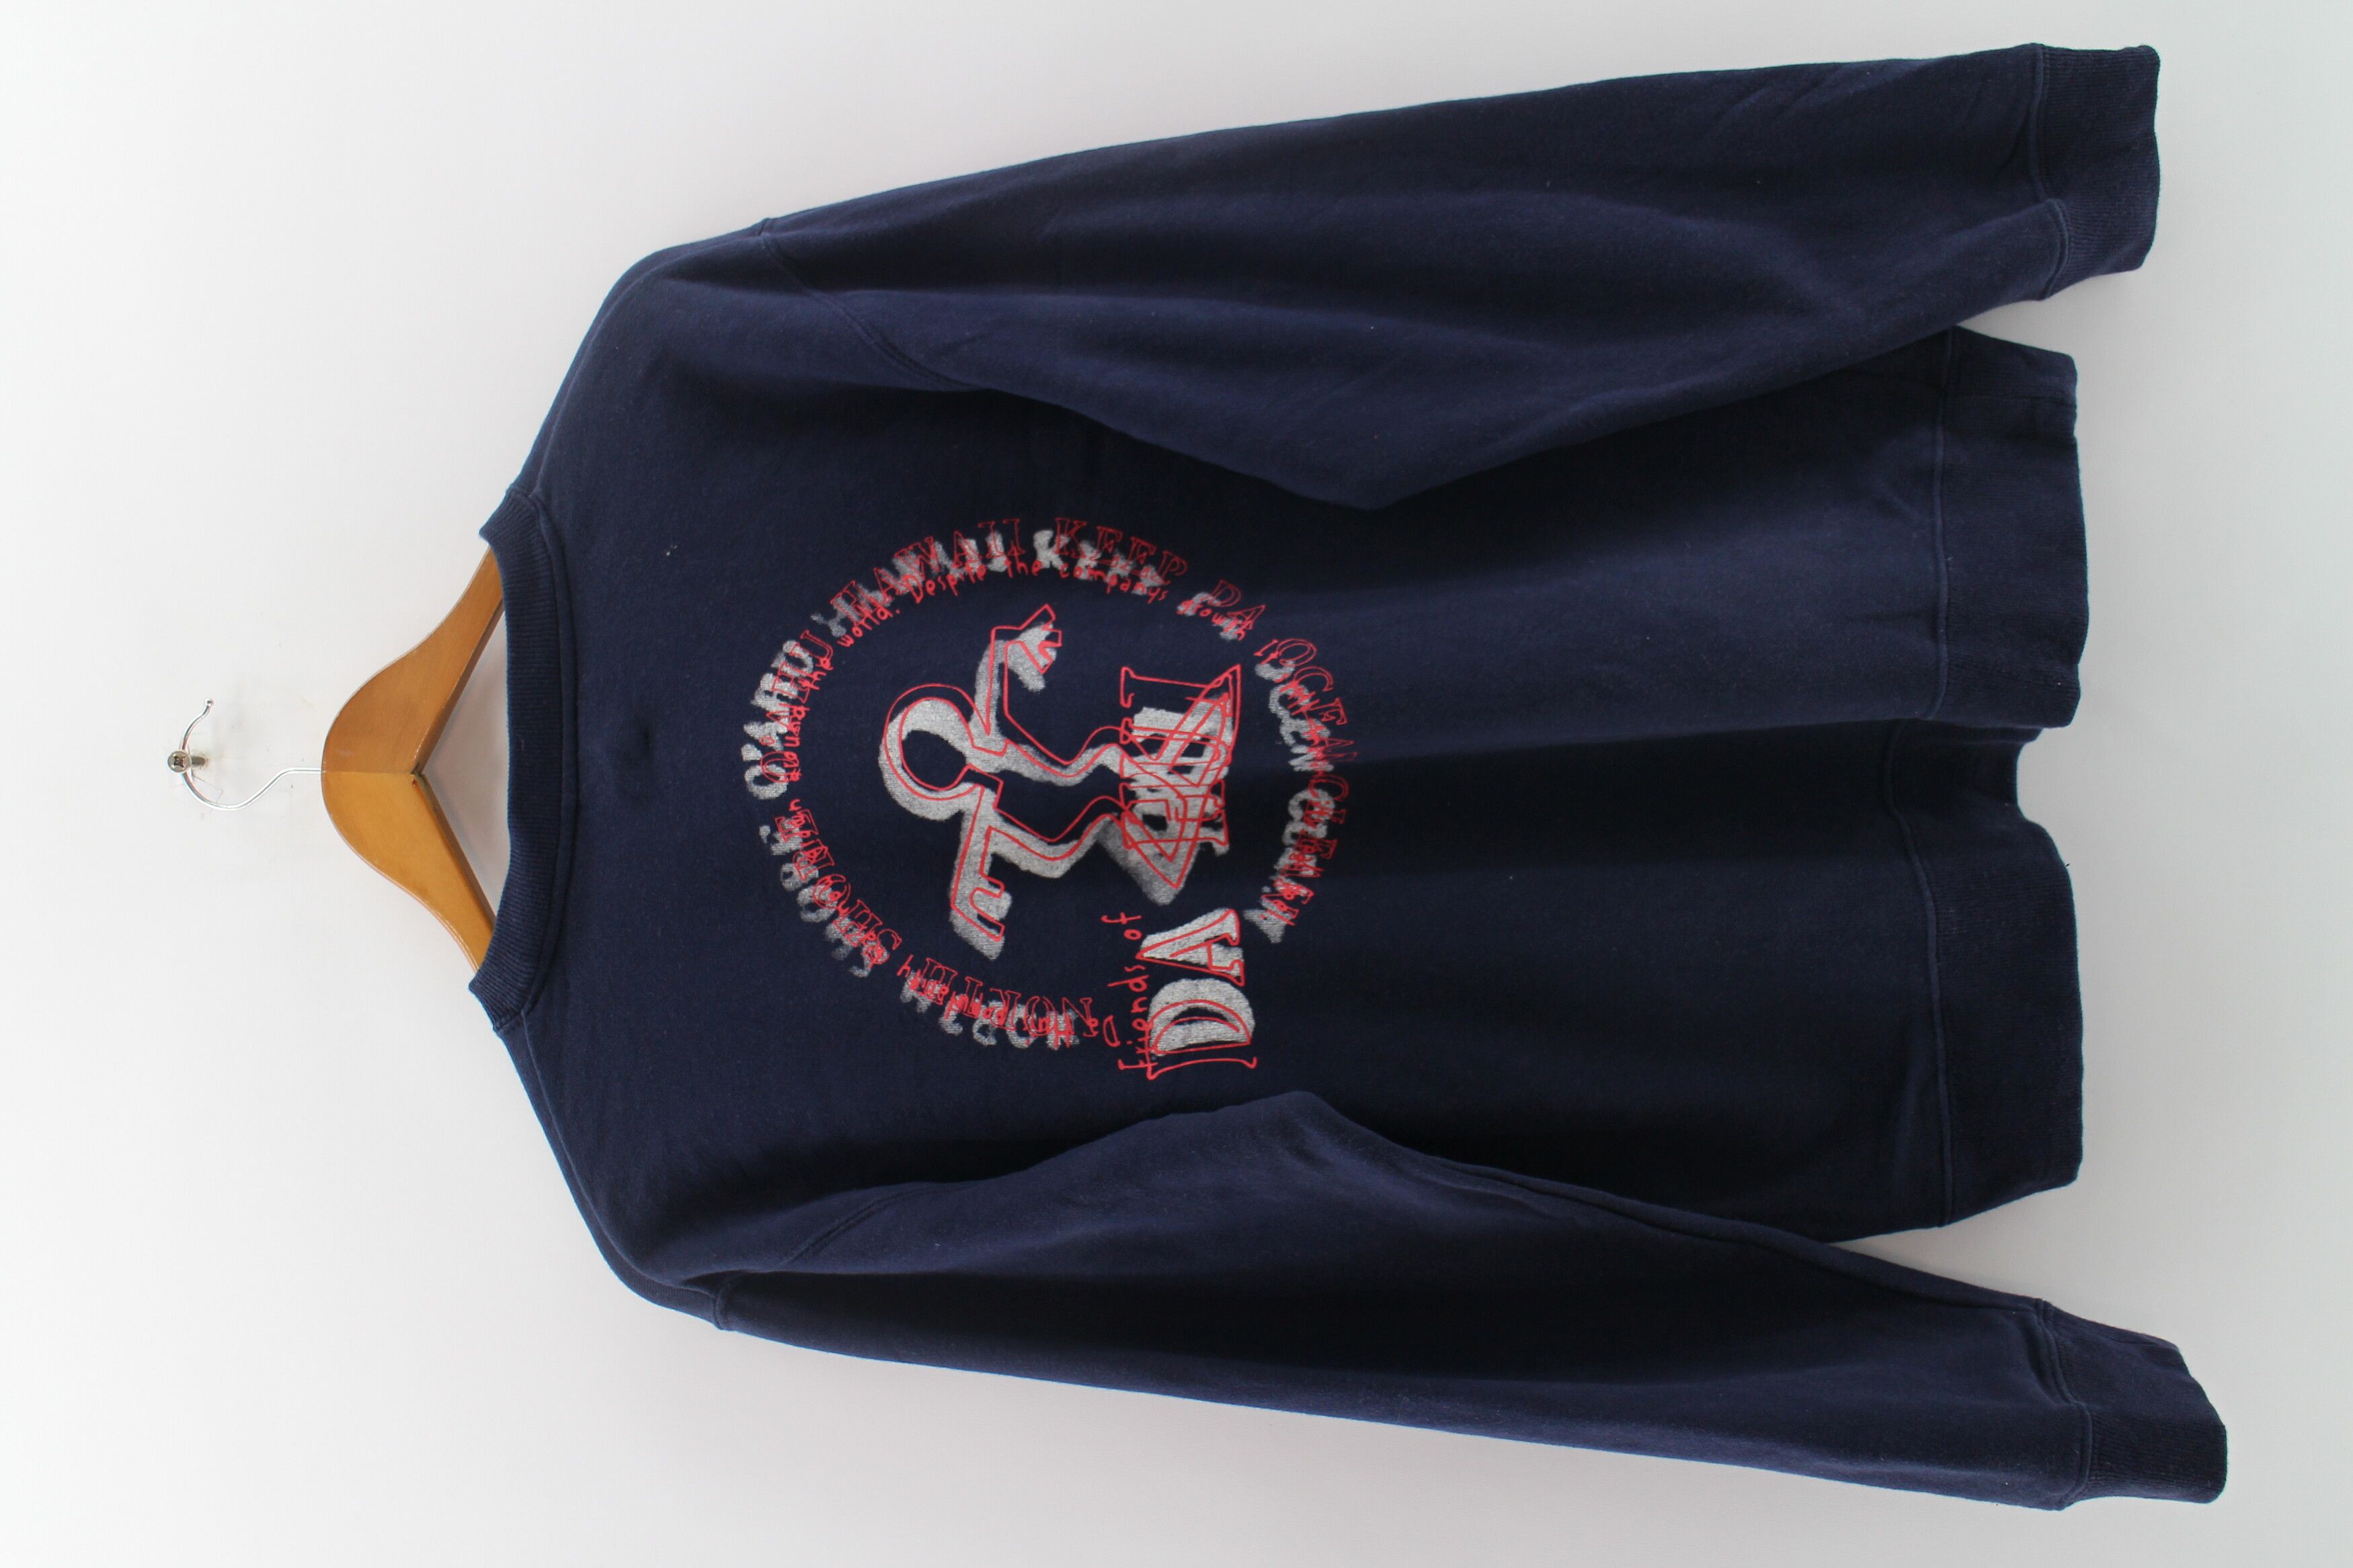 Vintage DA HUI Design Jumper Crewneck Vintage 90s Sweater Size M Size US M / EU 48-50 / 2 - 1 Preview